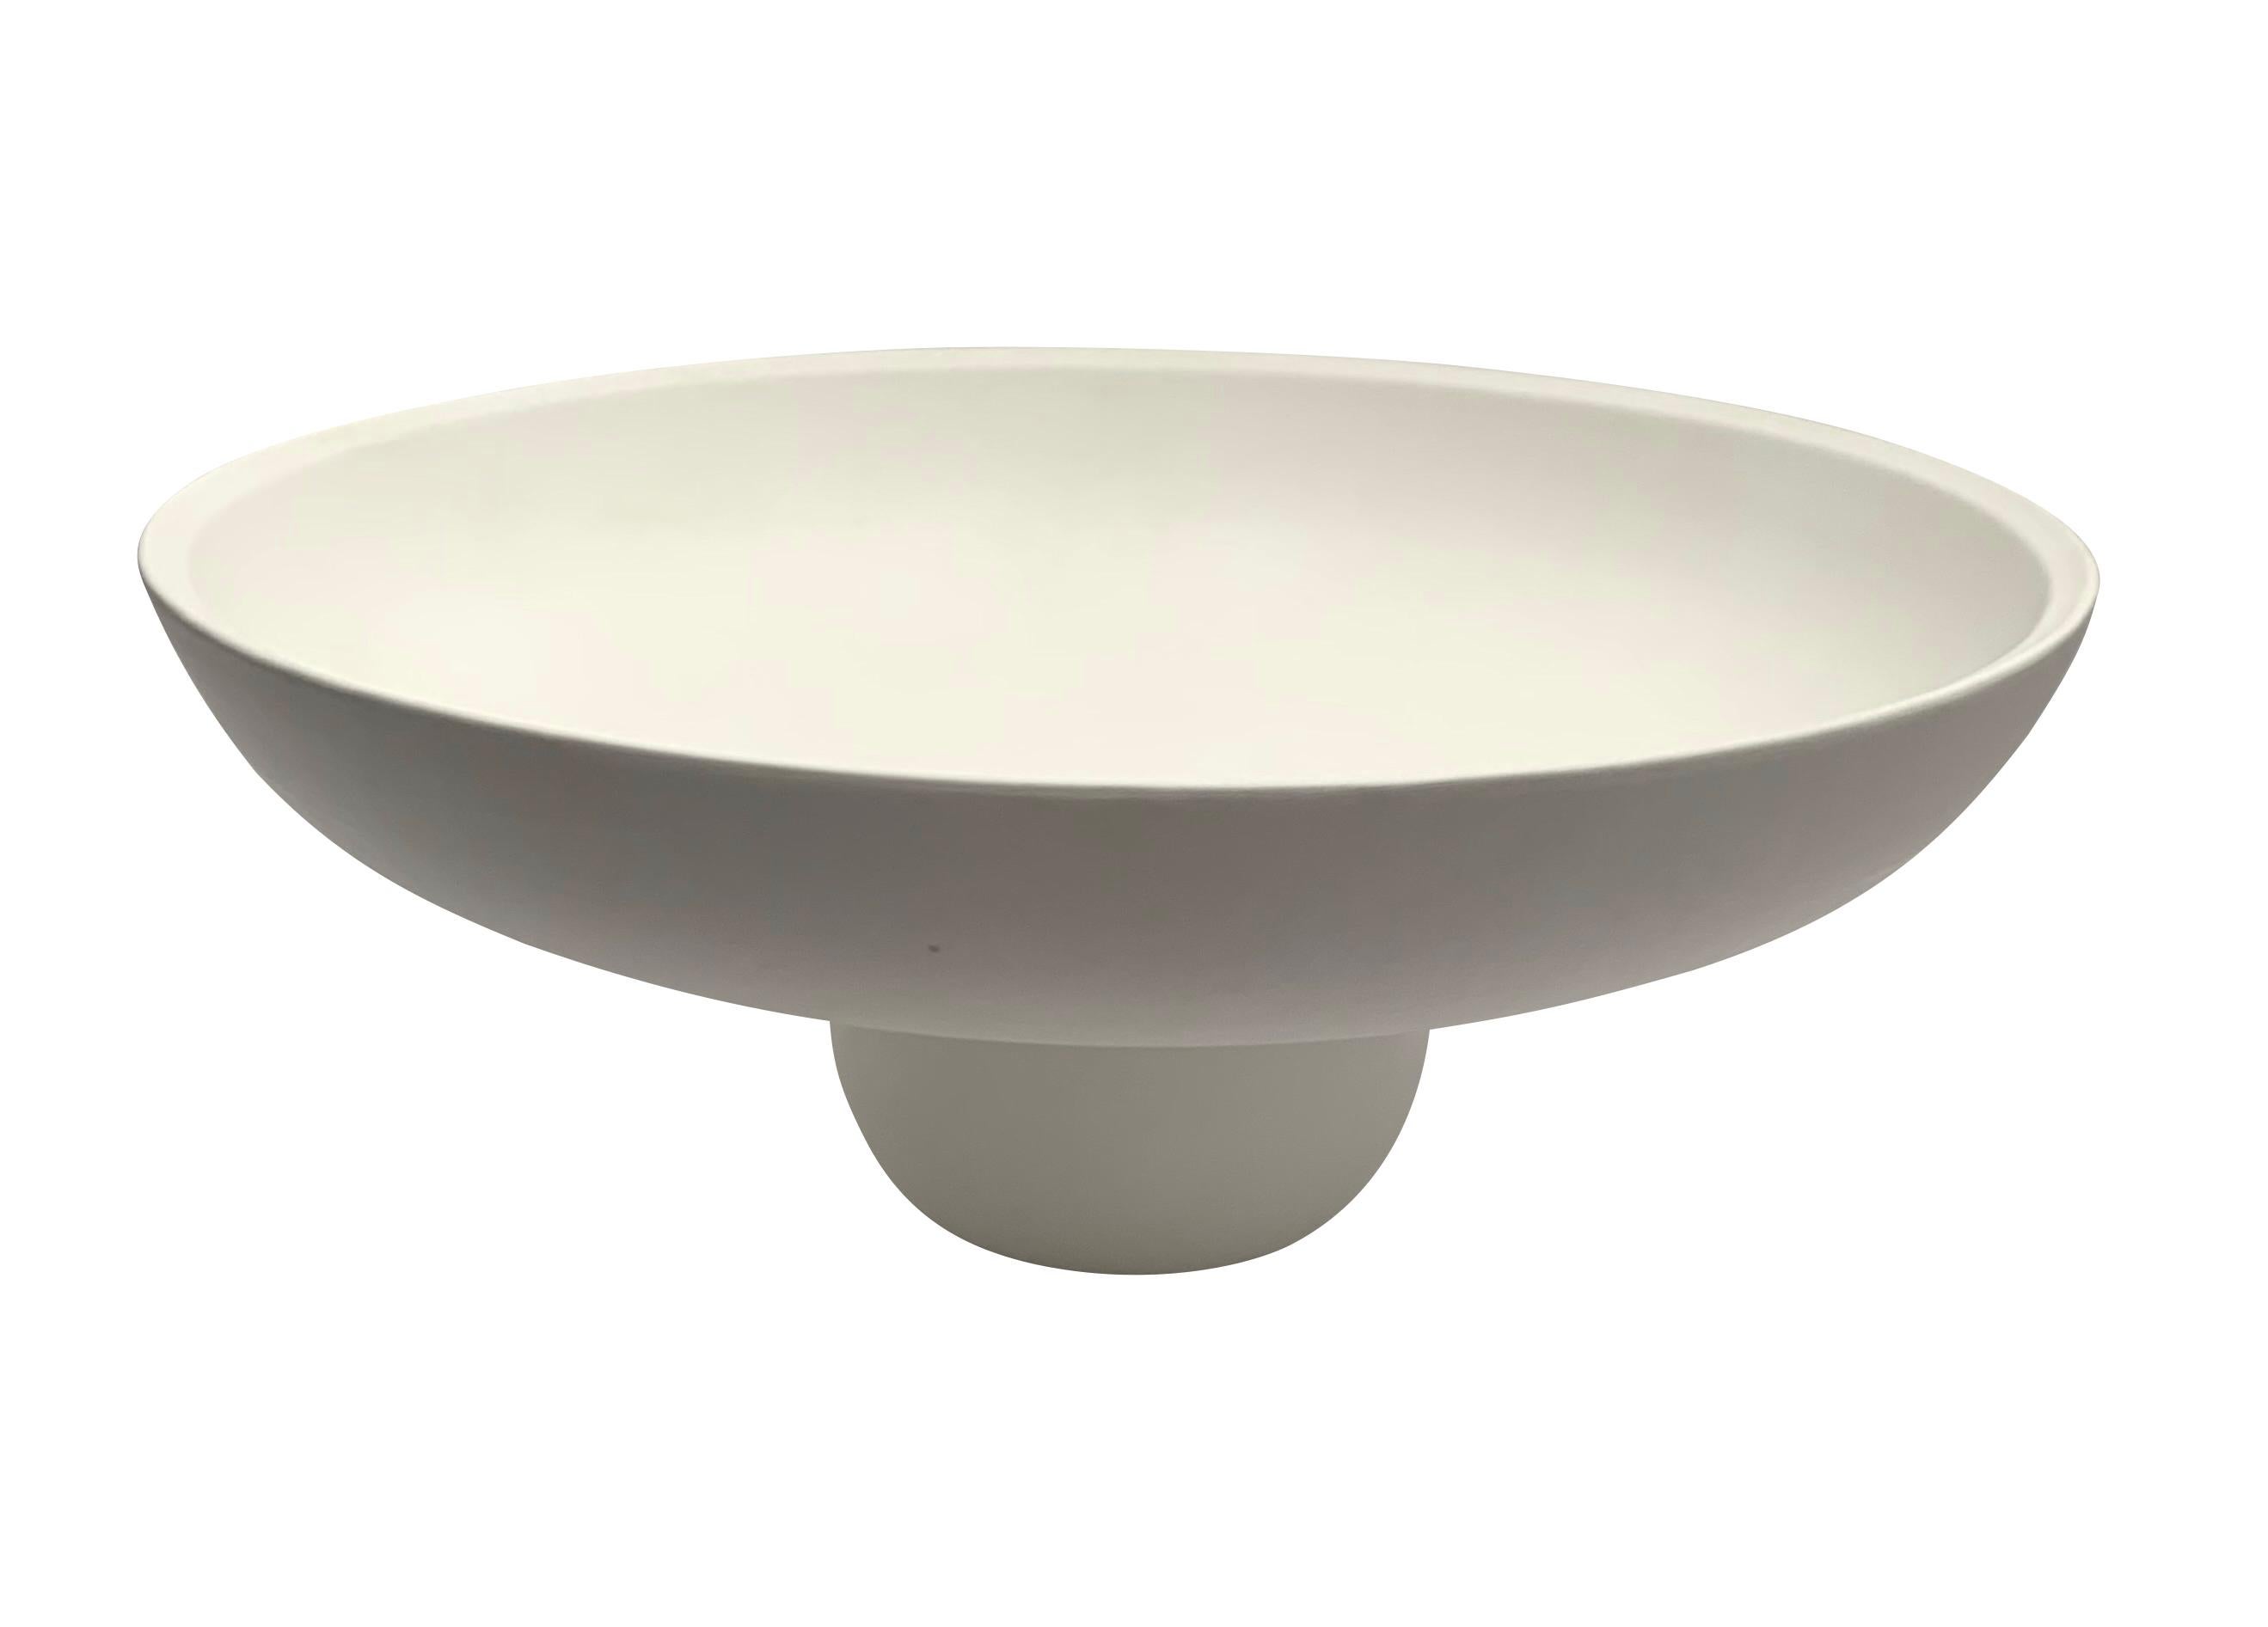 Contemporary Danish designed footed large round white ceramic bowl.
Base is cylinder shaped.
